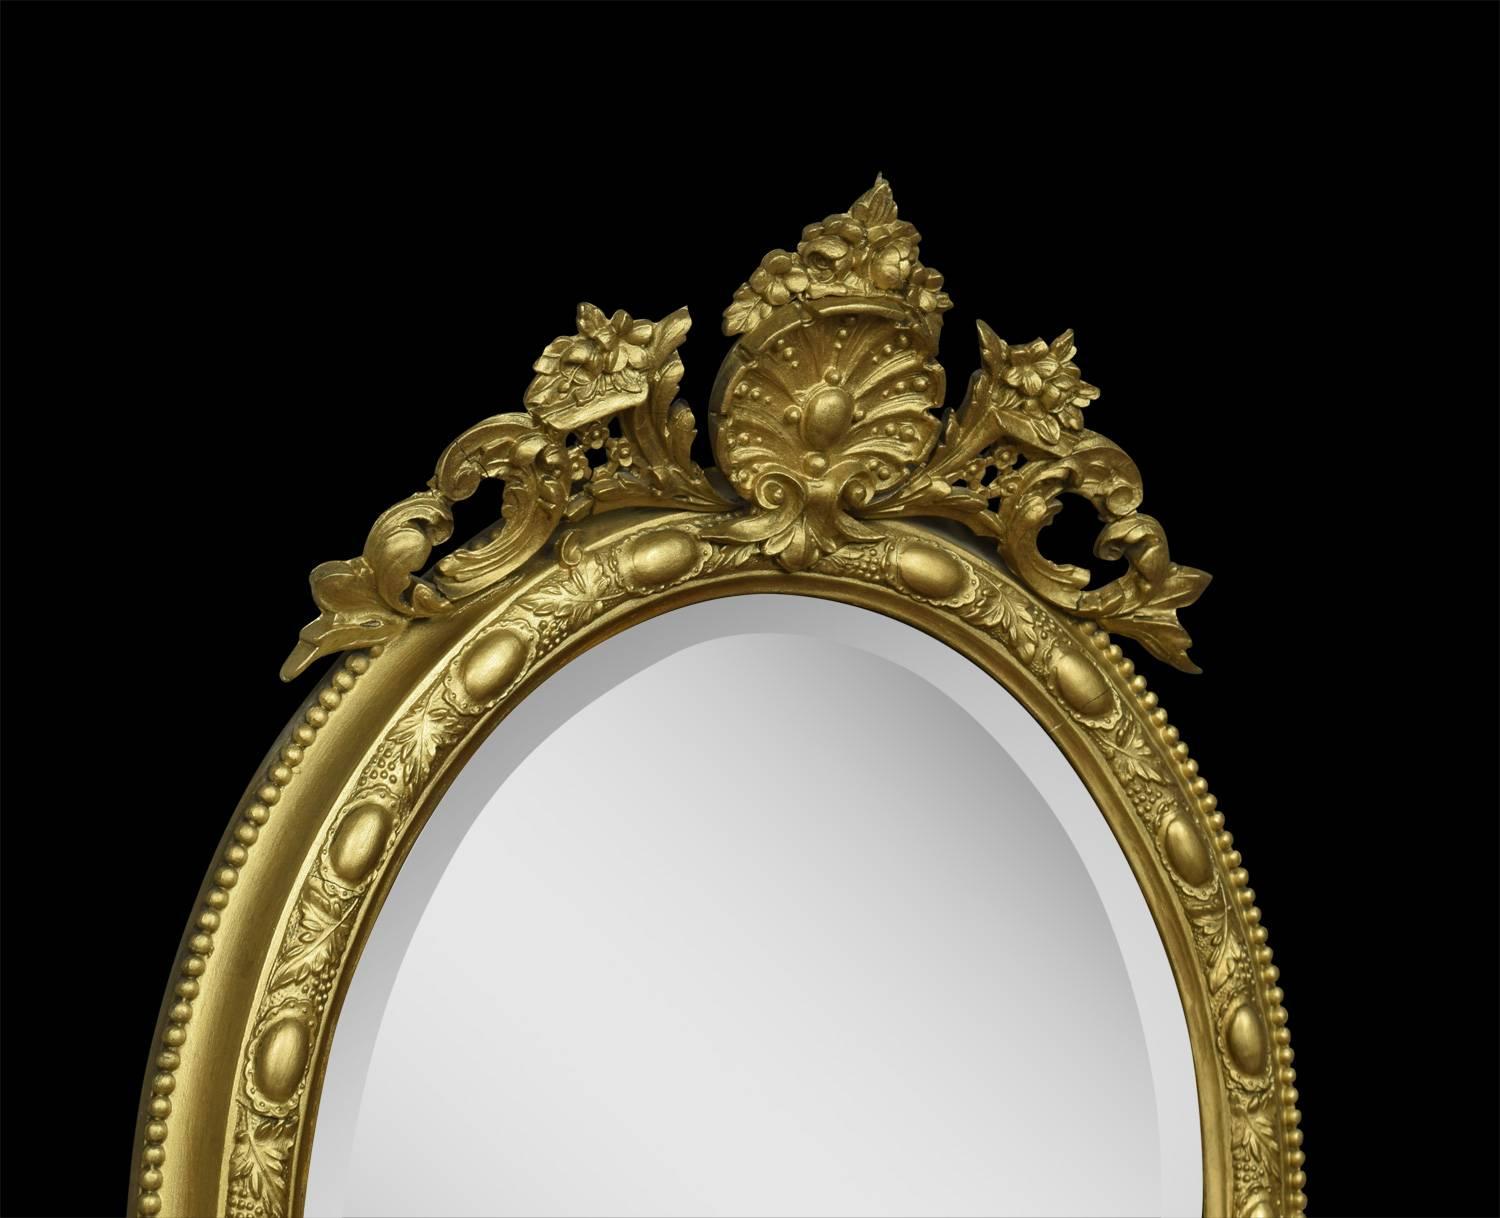 Great Britain (UK) Pair of 19th Century Gilt Composition Oval Girandoles Mirrors